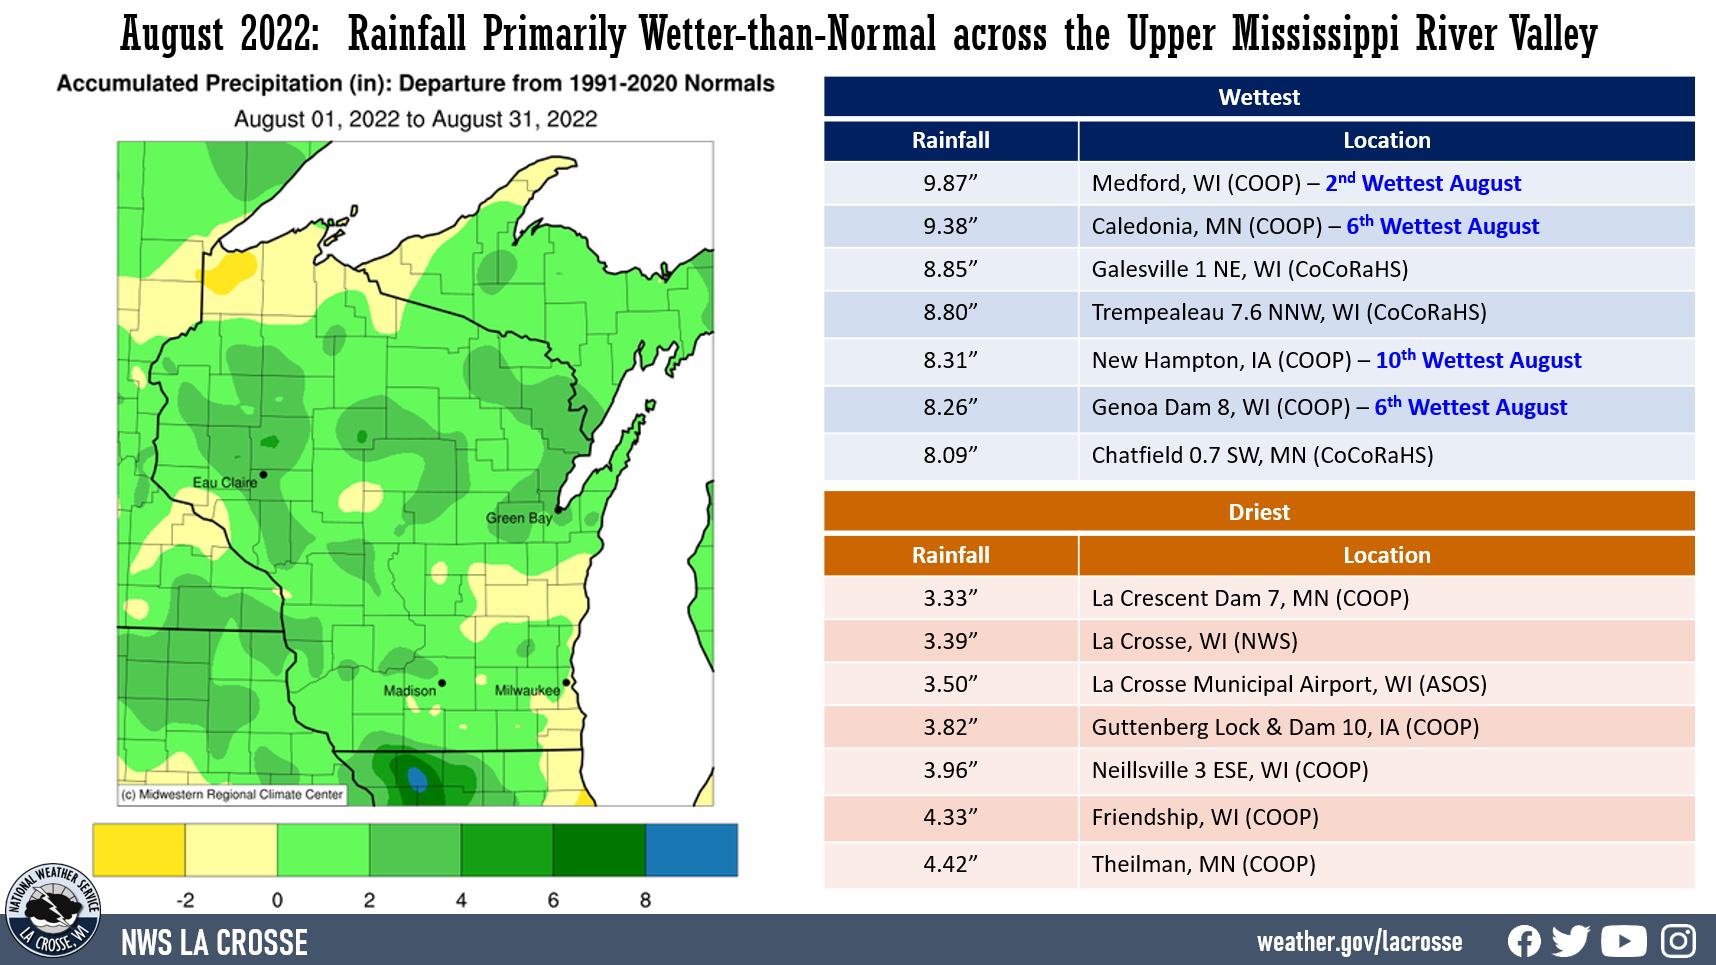 ugust rainfall statistics across the Upper Mississippi River Valley